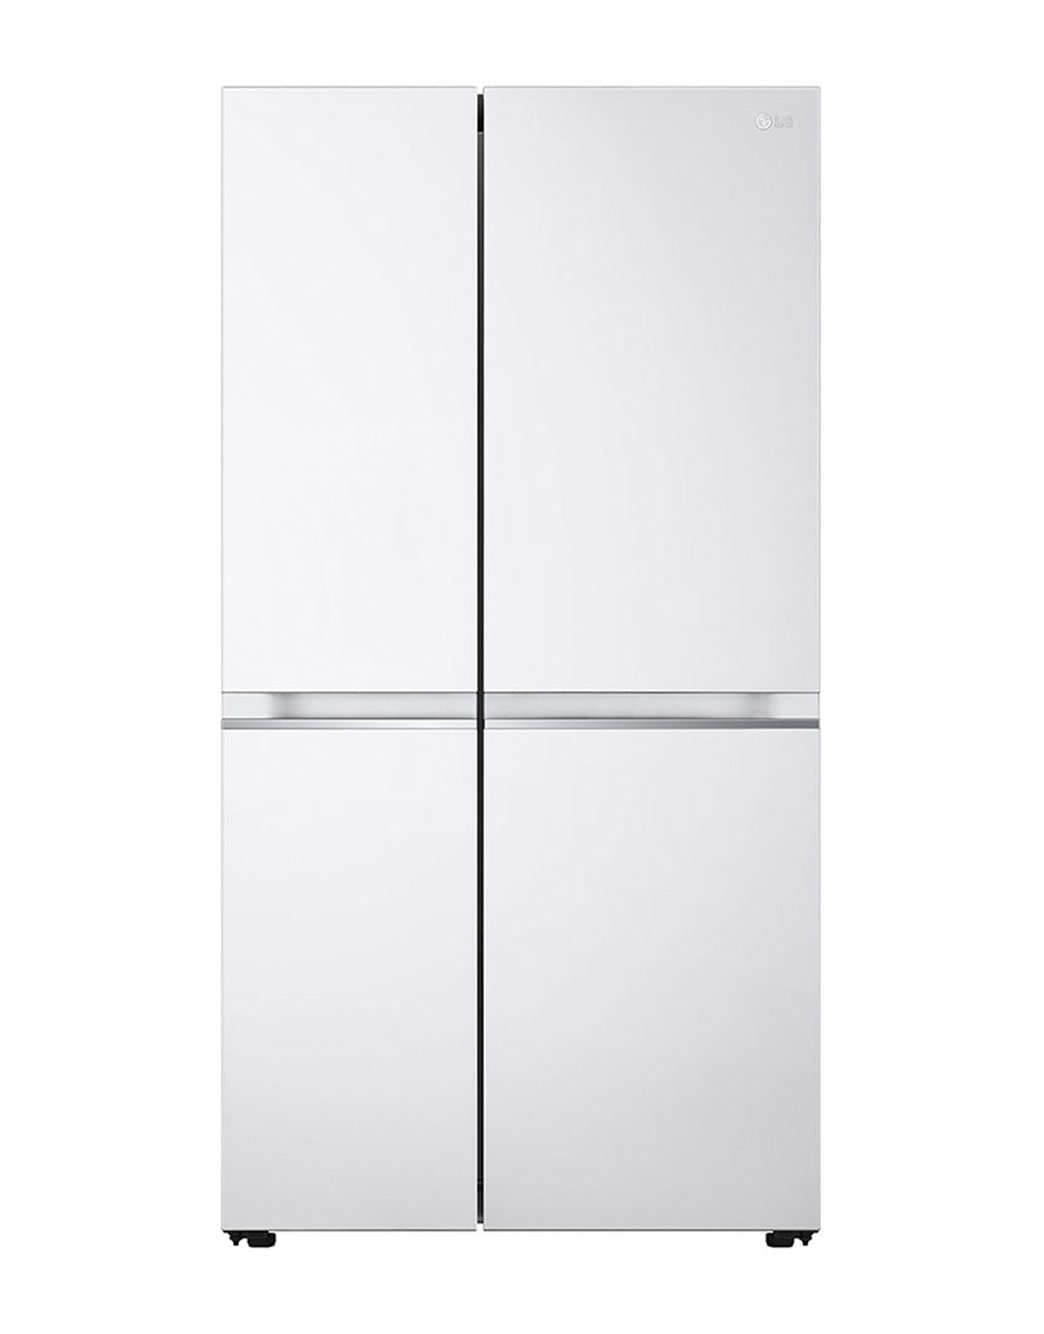 bing lee small fridge Cheap Sell - OFF 68%